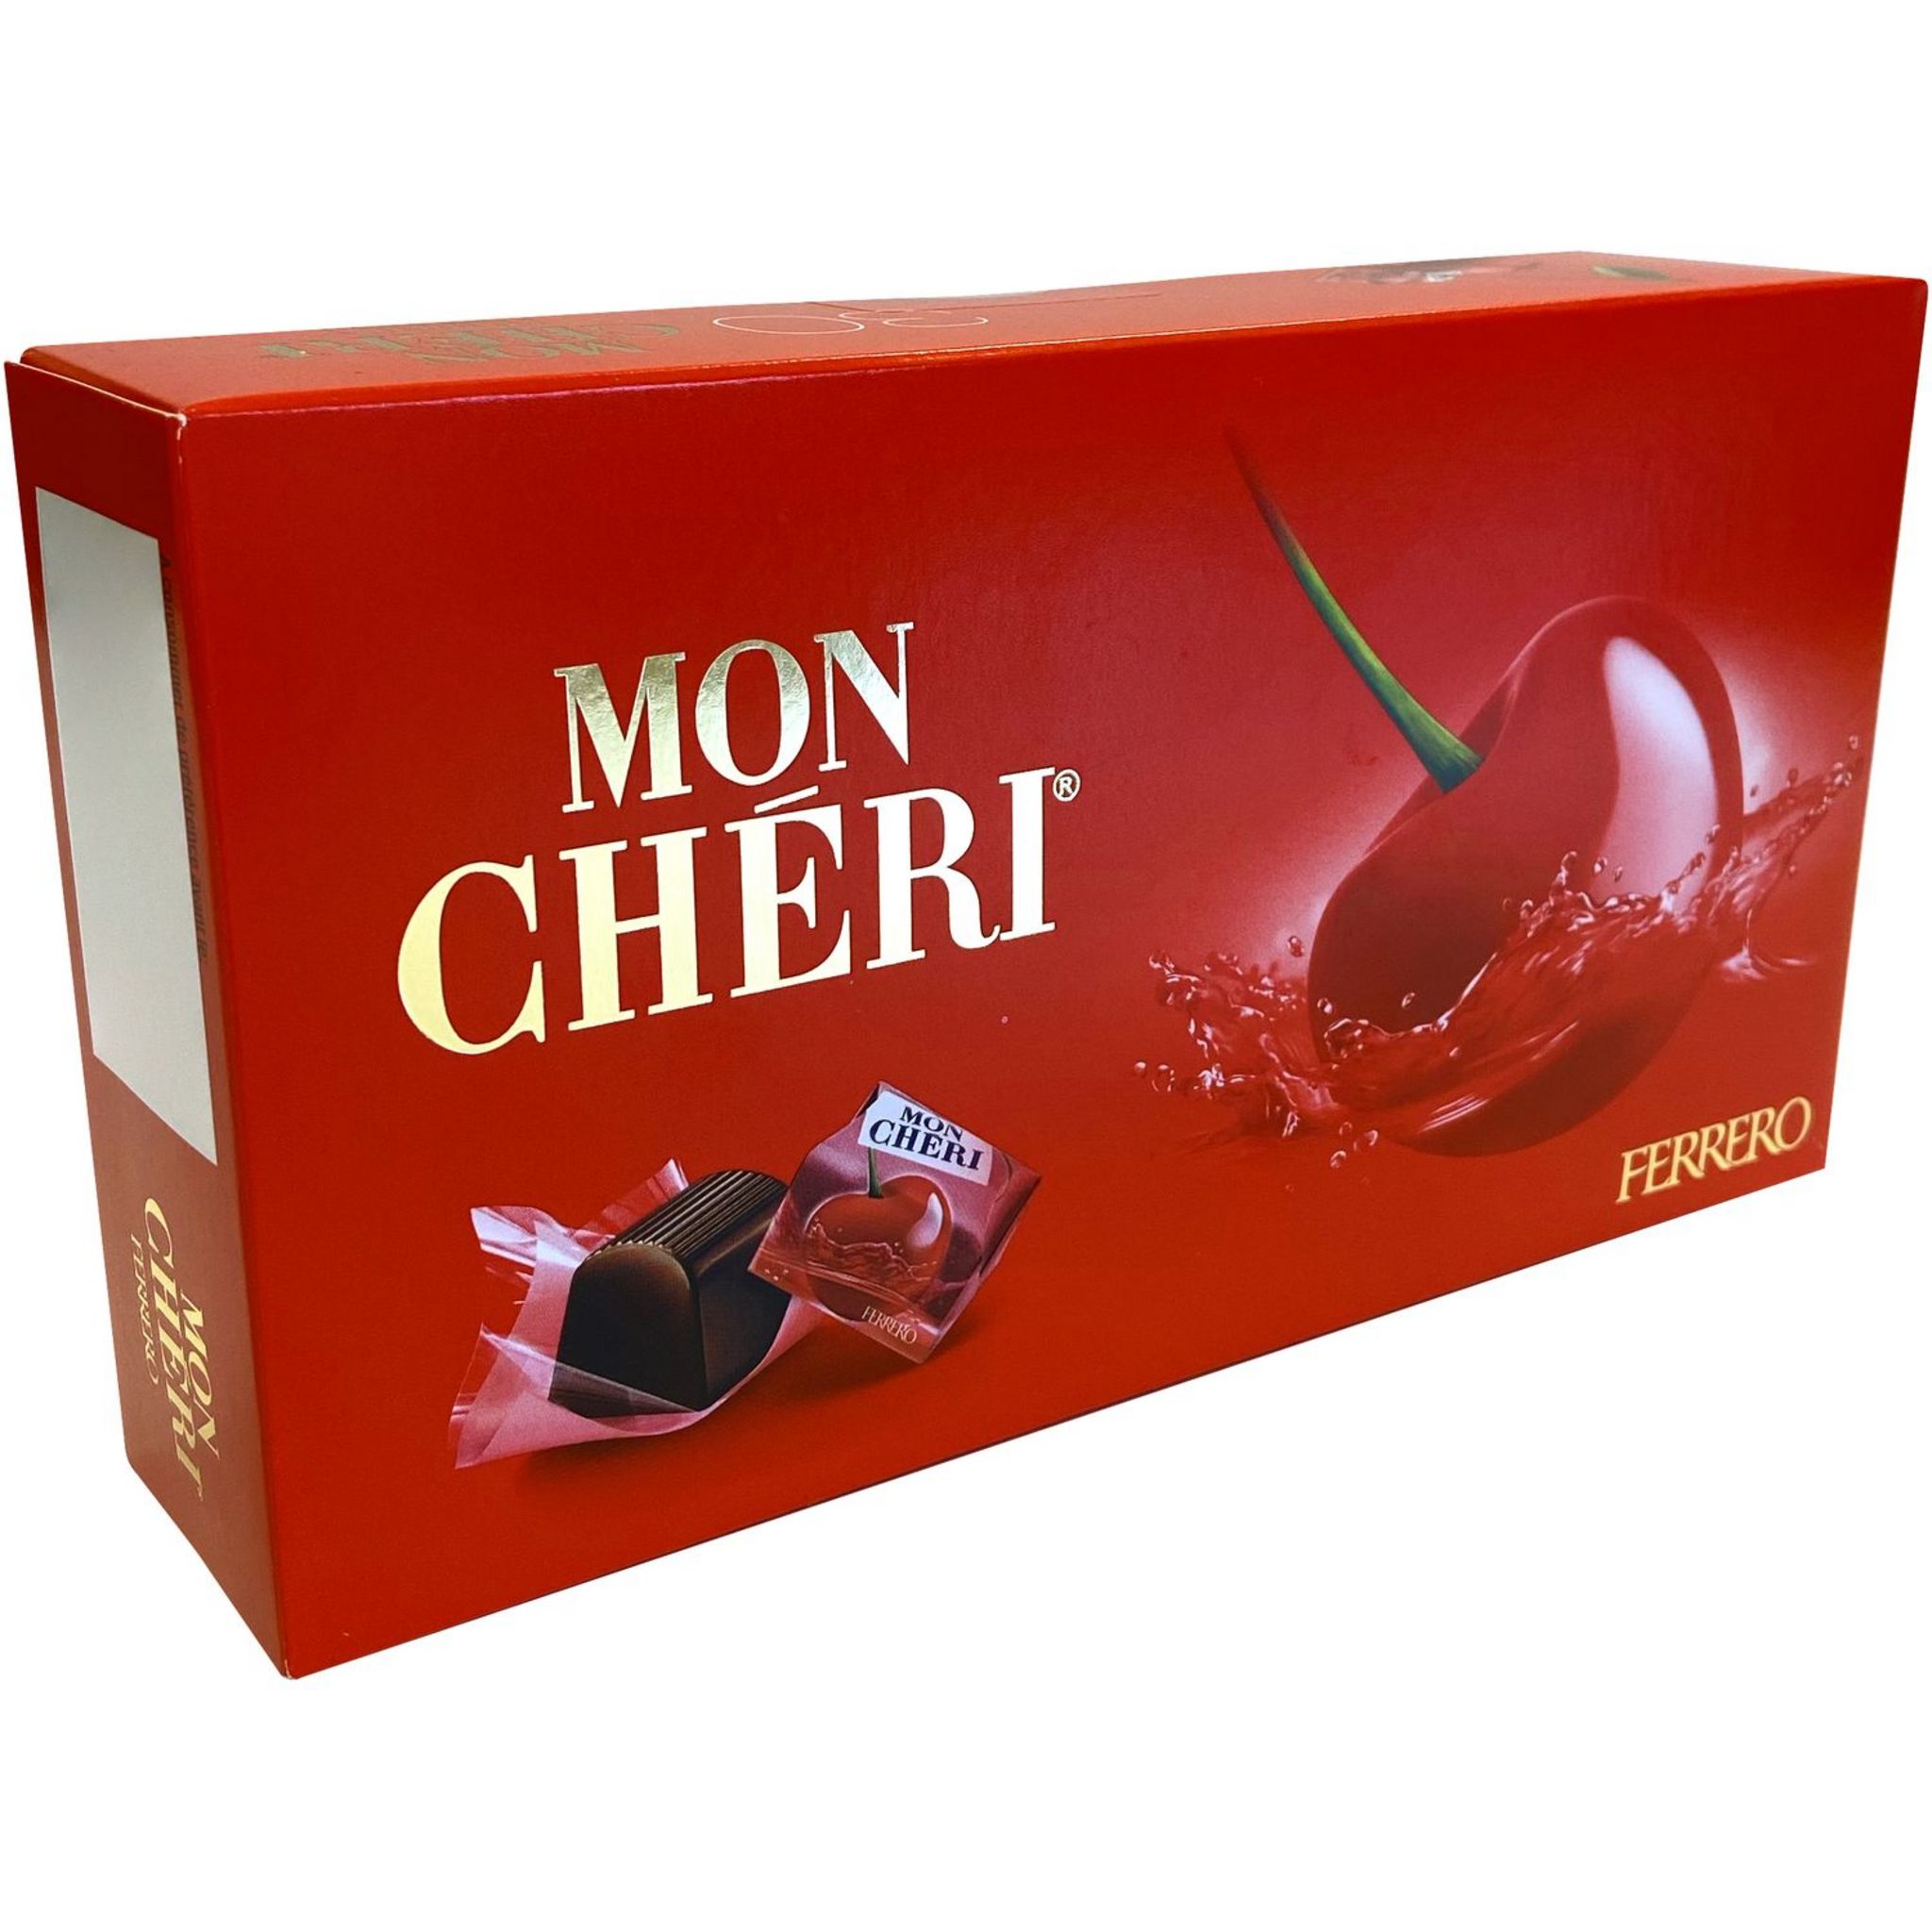  Ferrero Mon Cheri Hazelnut Chocolates 9 pieces (1